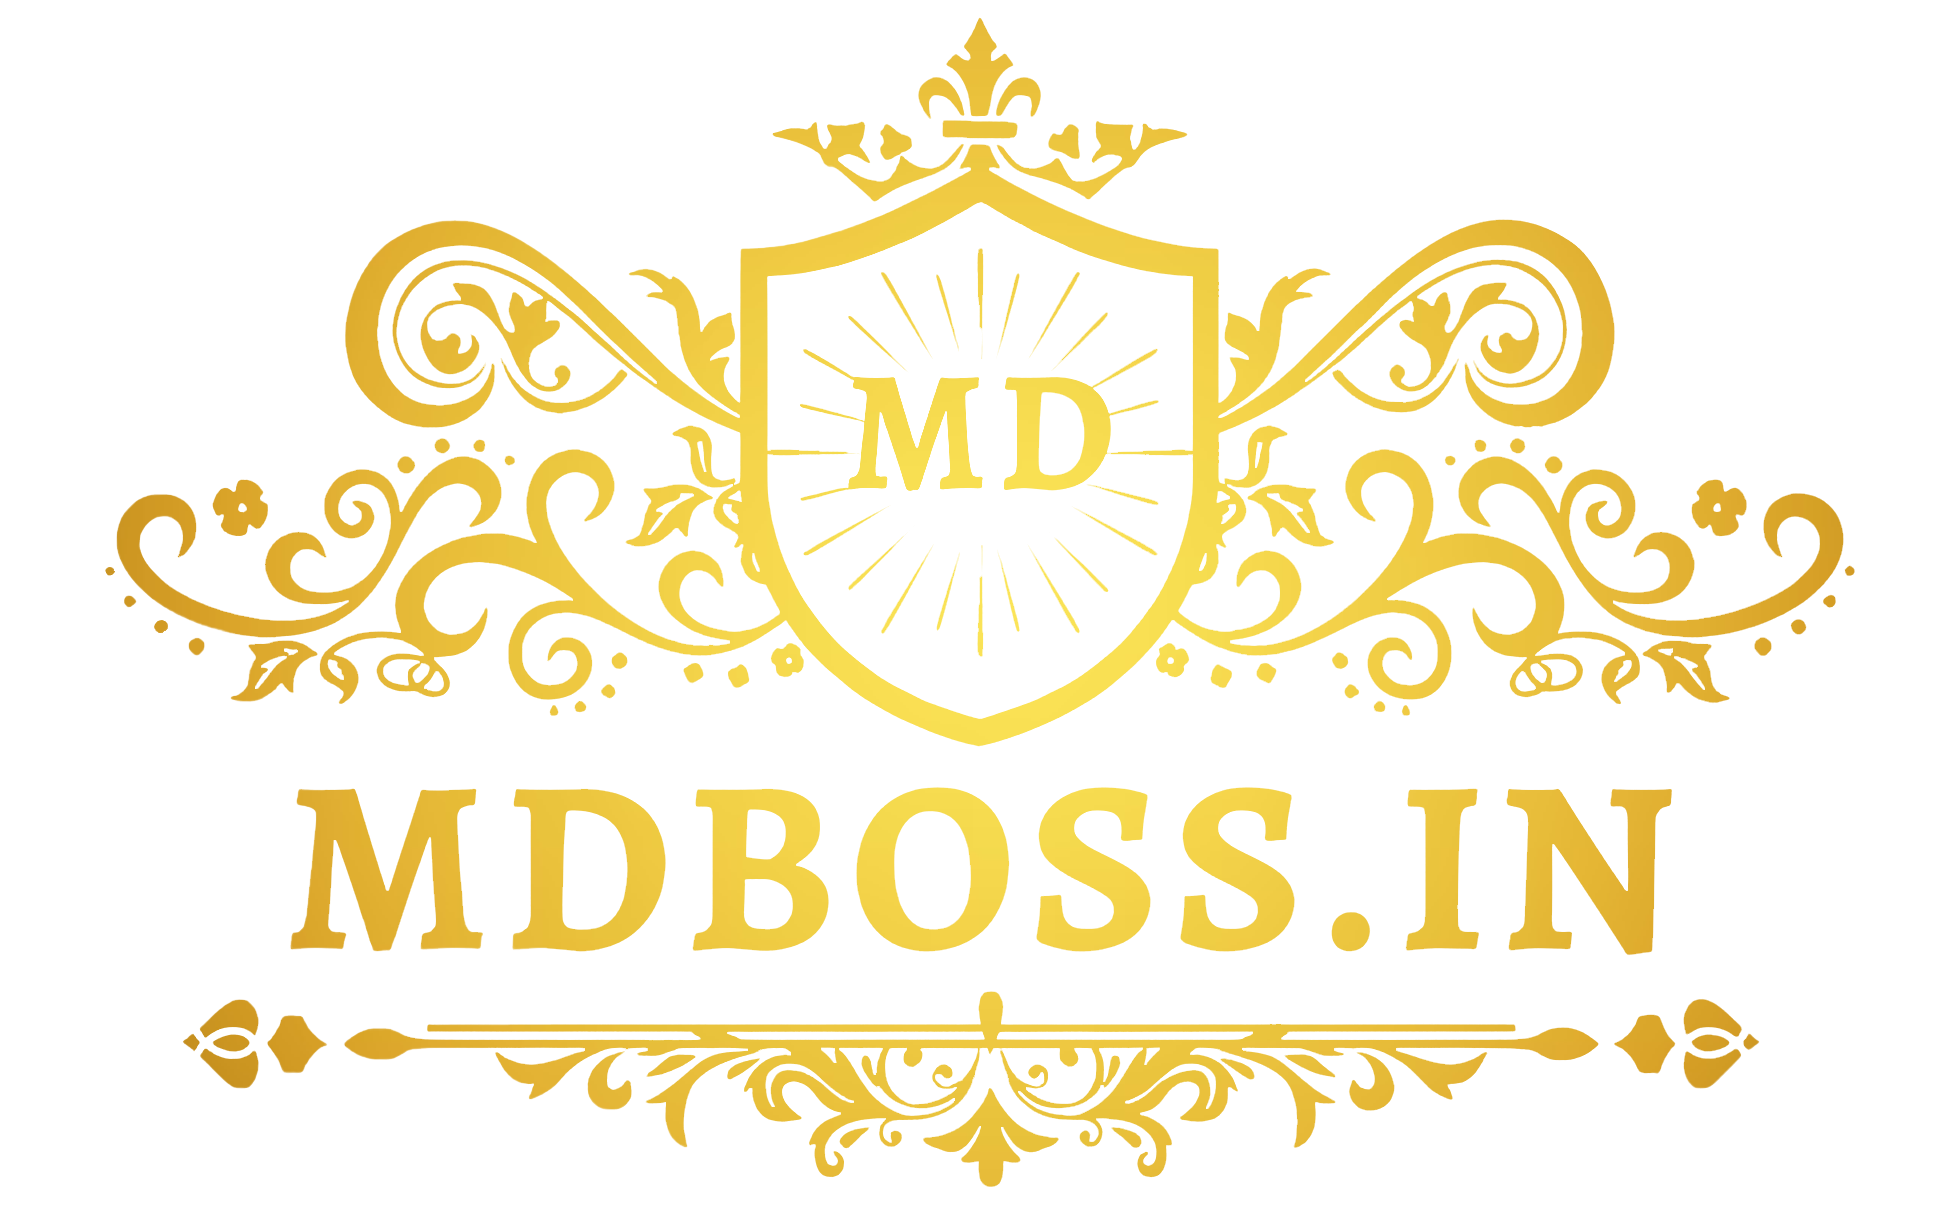 mdboss.in image